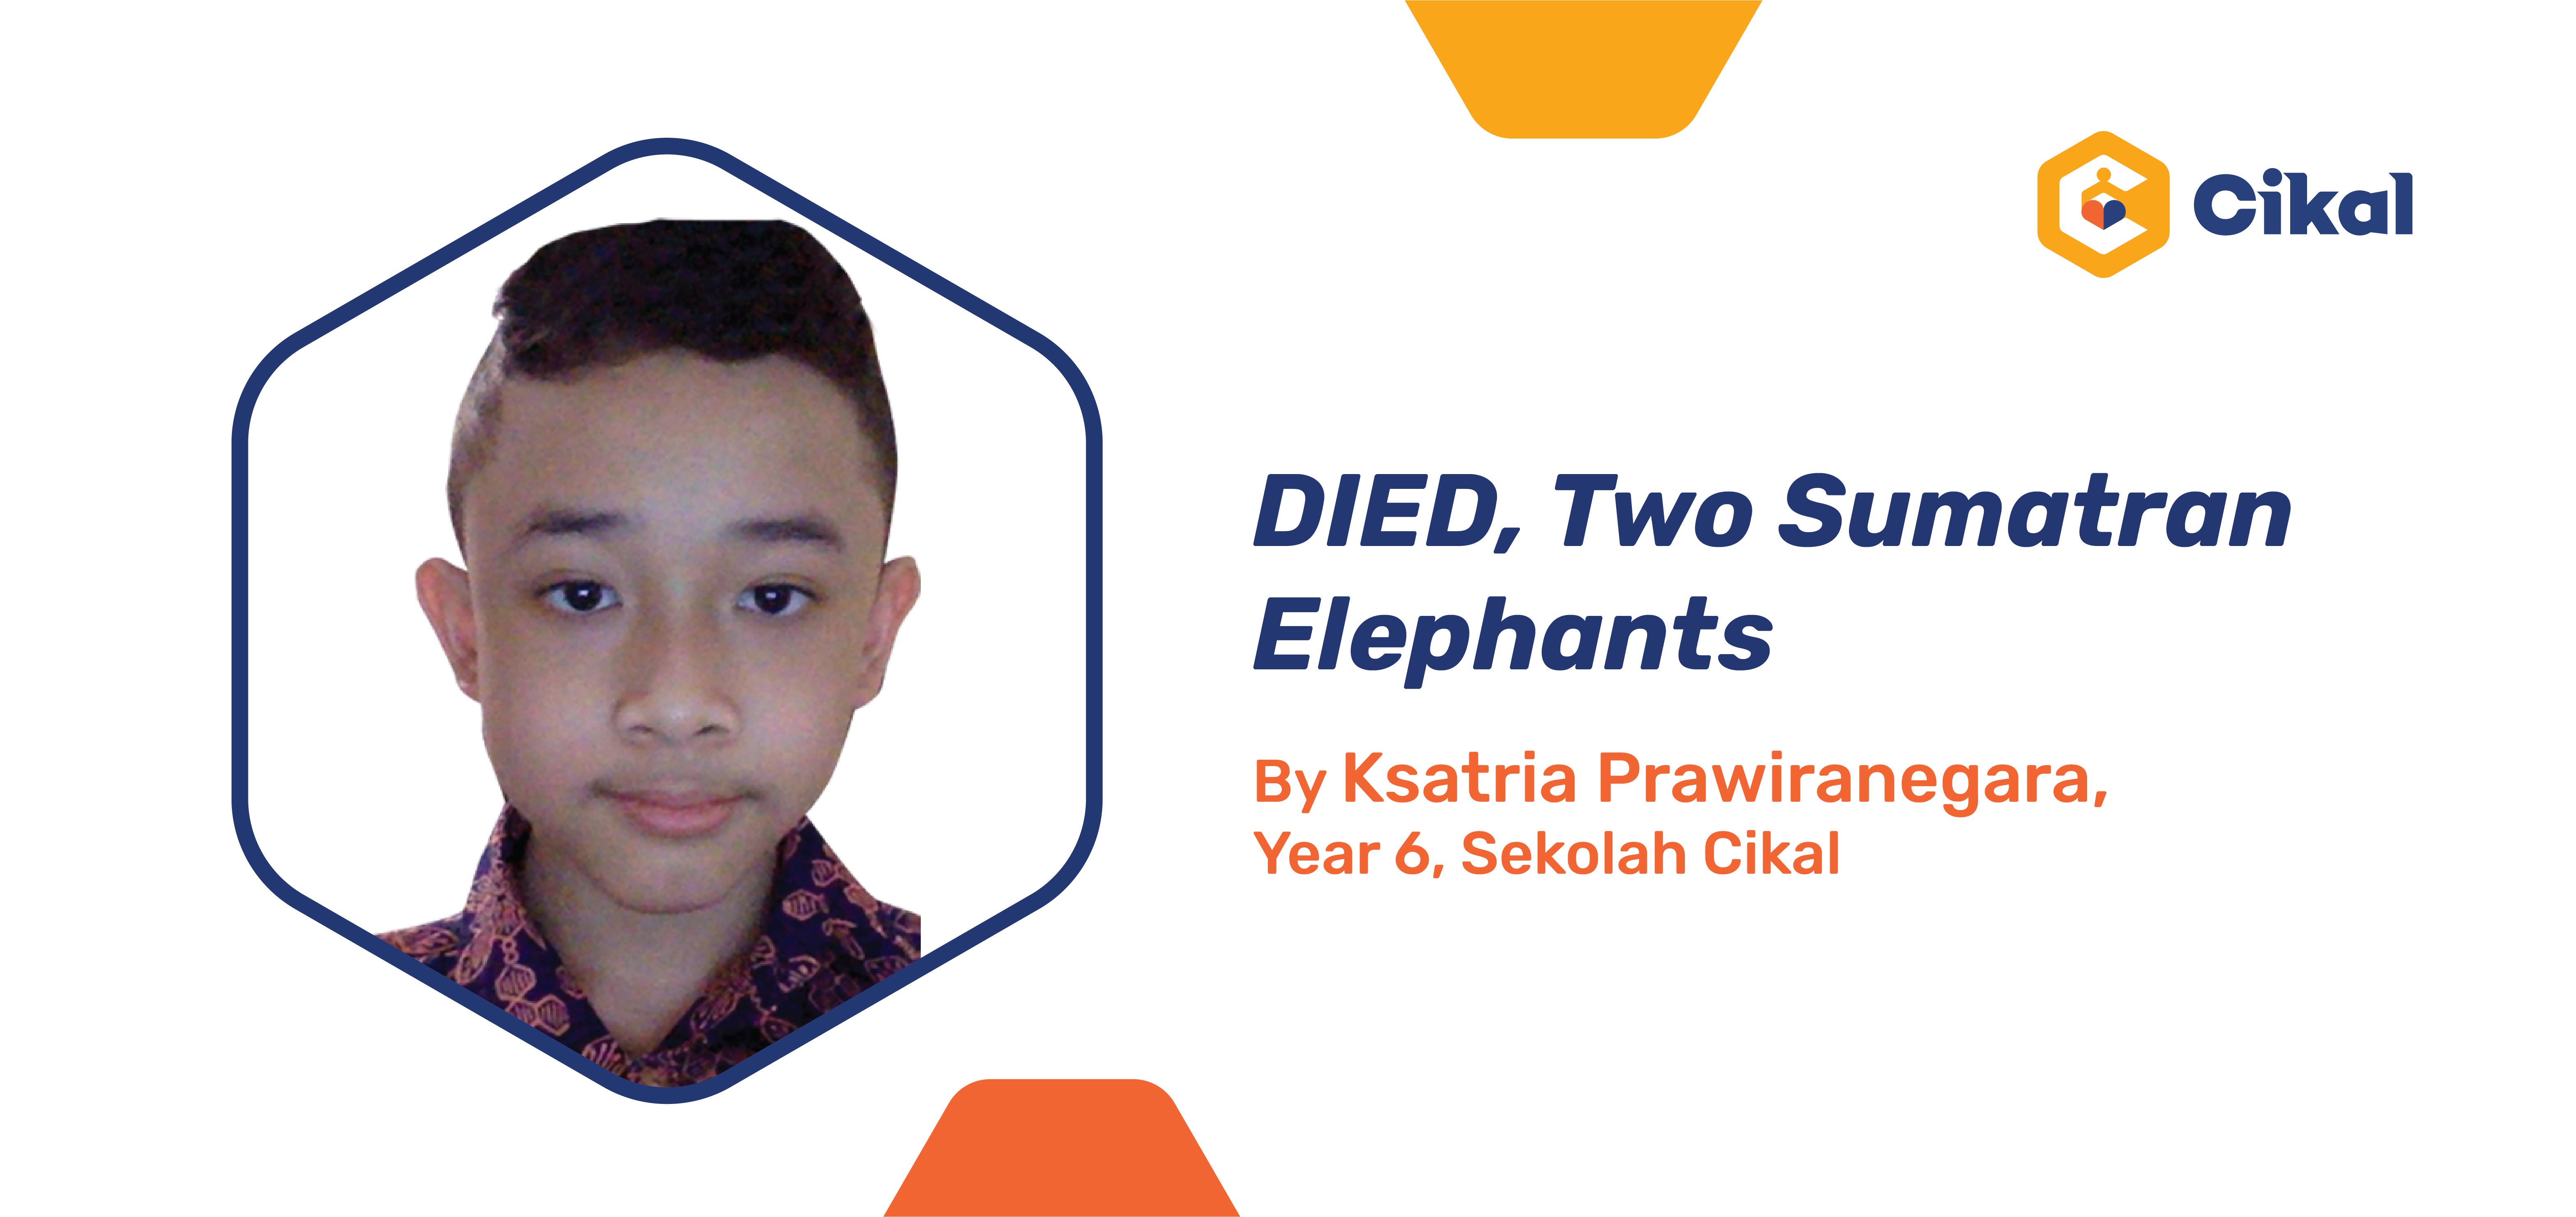 DIED, Two Sumatran Elephants By Ksatria Prawiranegara, Year 6, Sekolah Cikal 